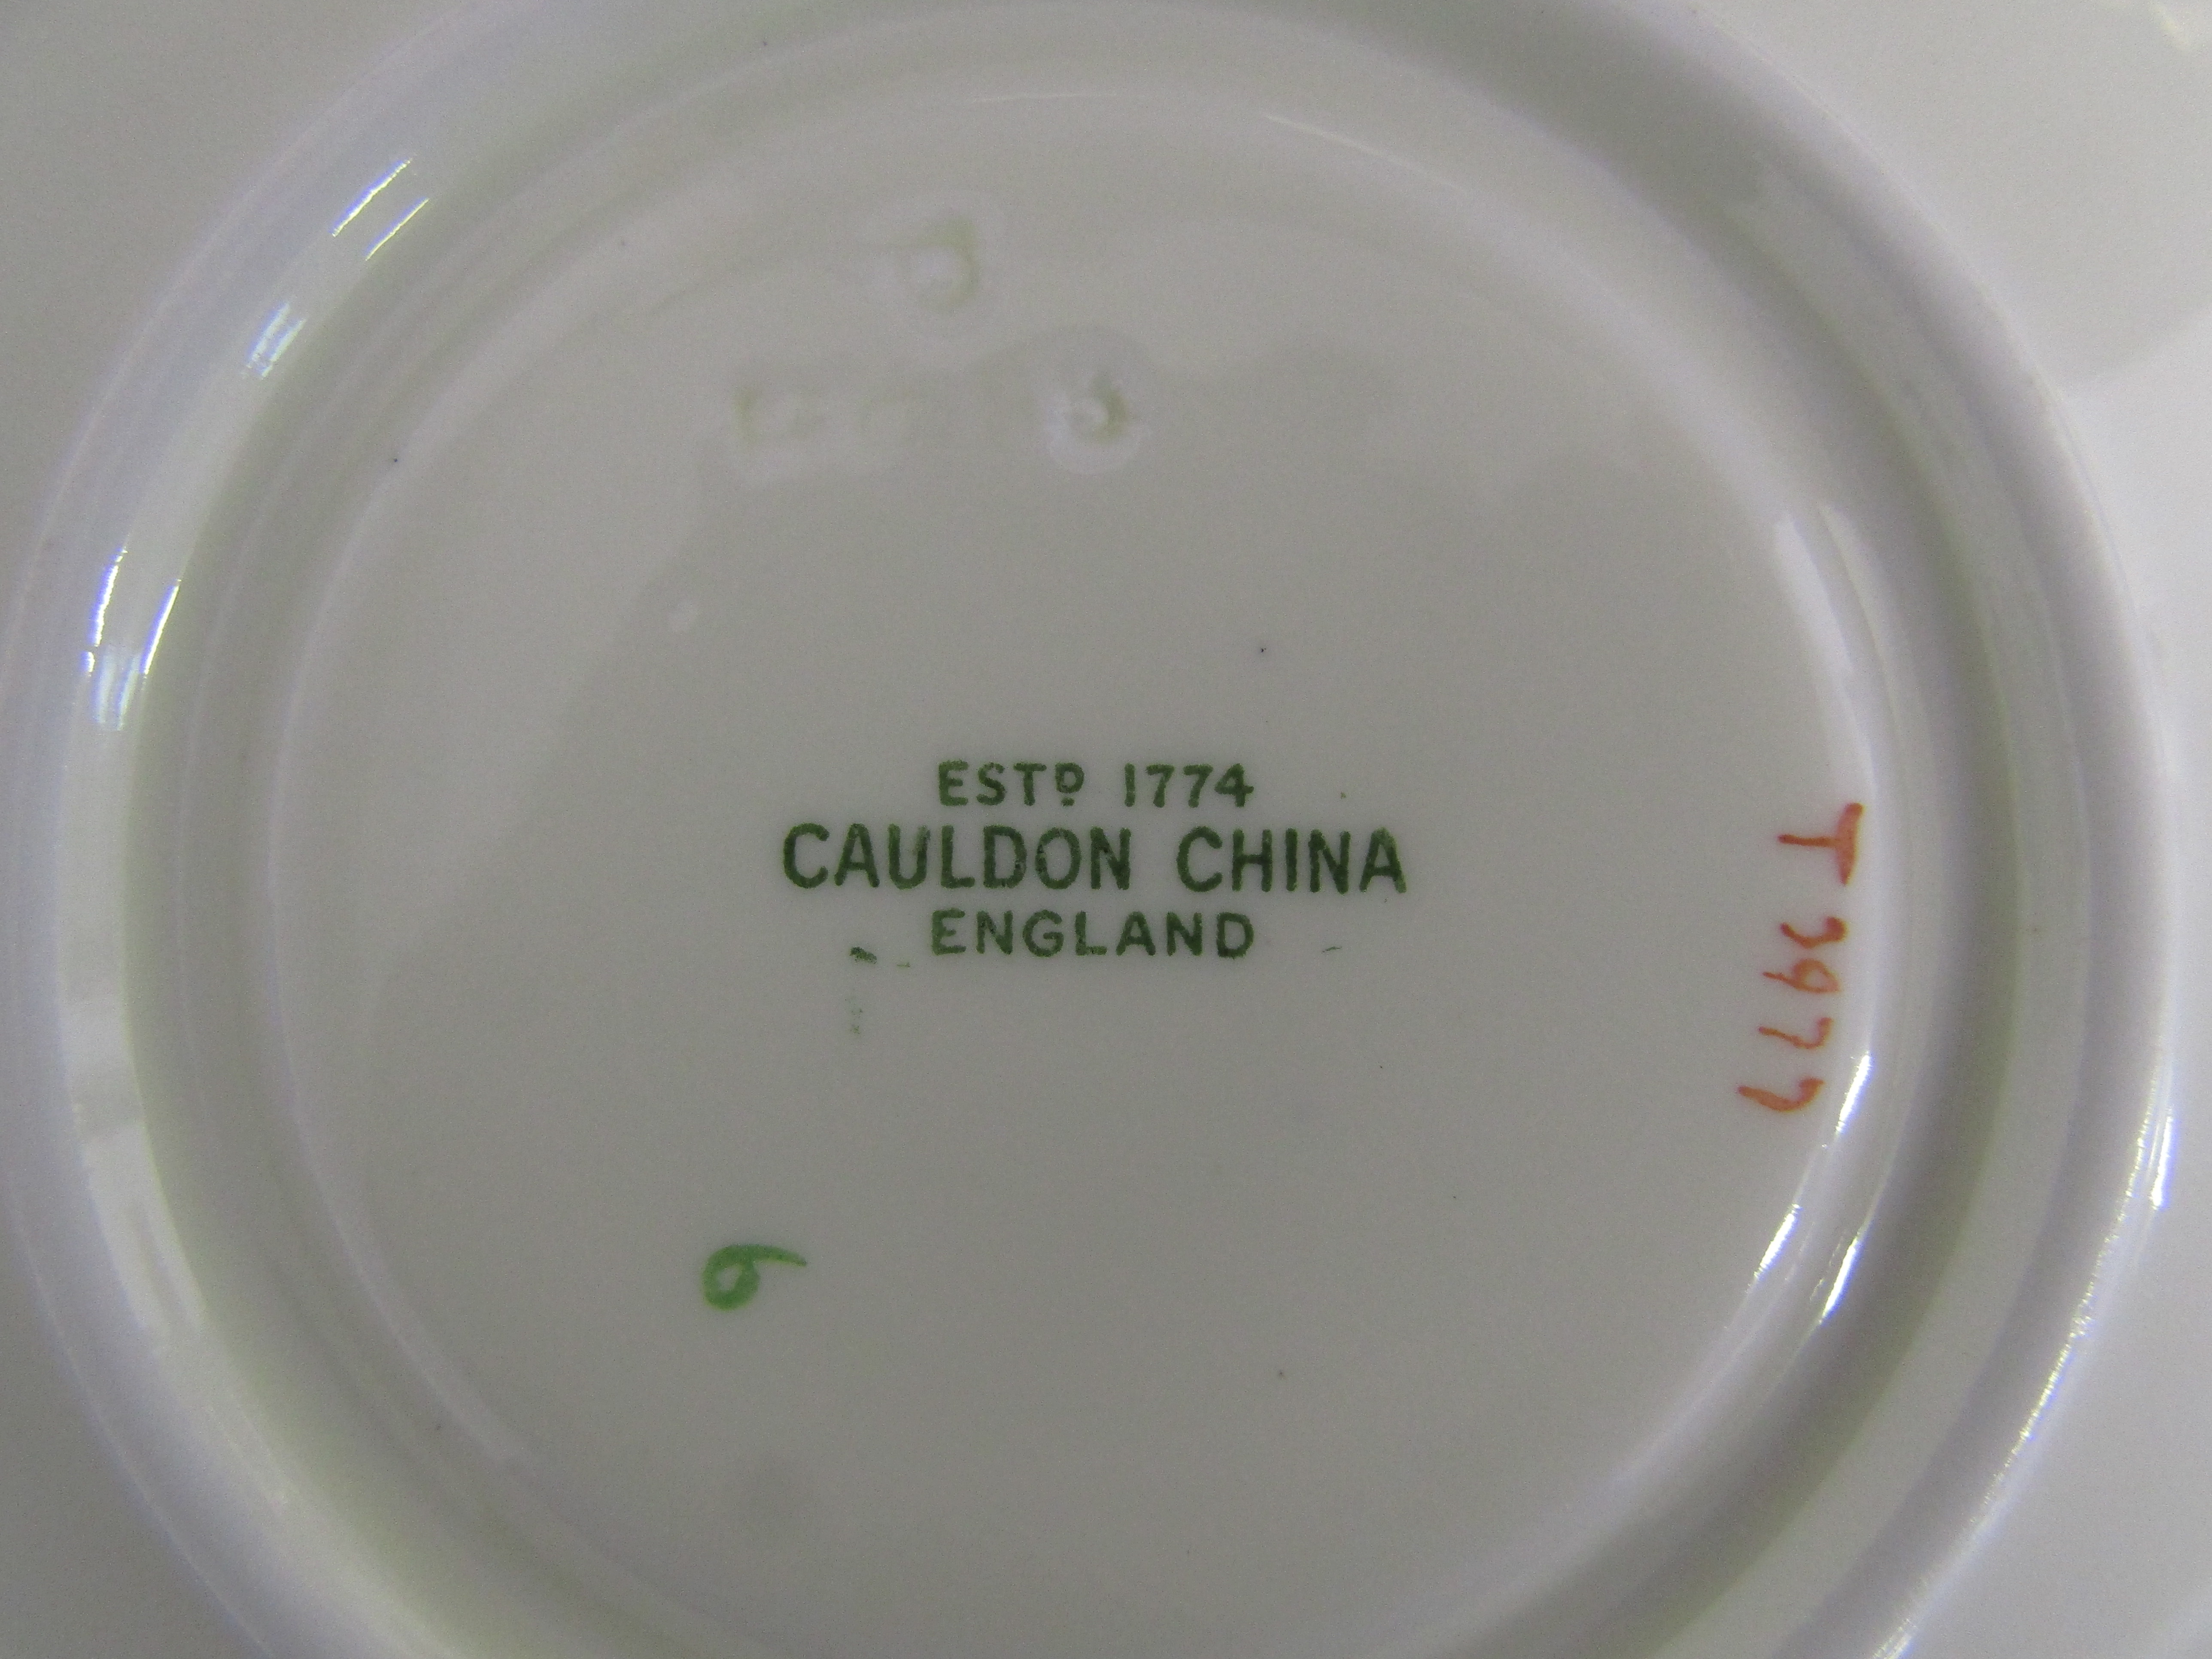 Cauldon Ware China, 3977 tea set includes 2 cake plates, 12 side plates, 12 cups and saucers, - Image 7 of 8